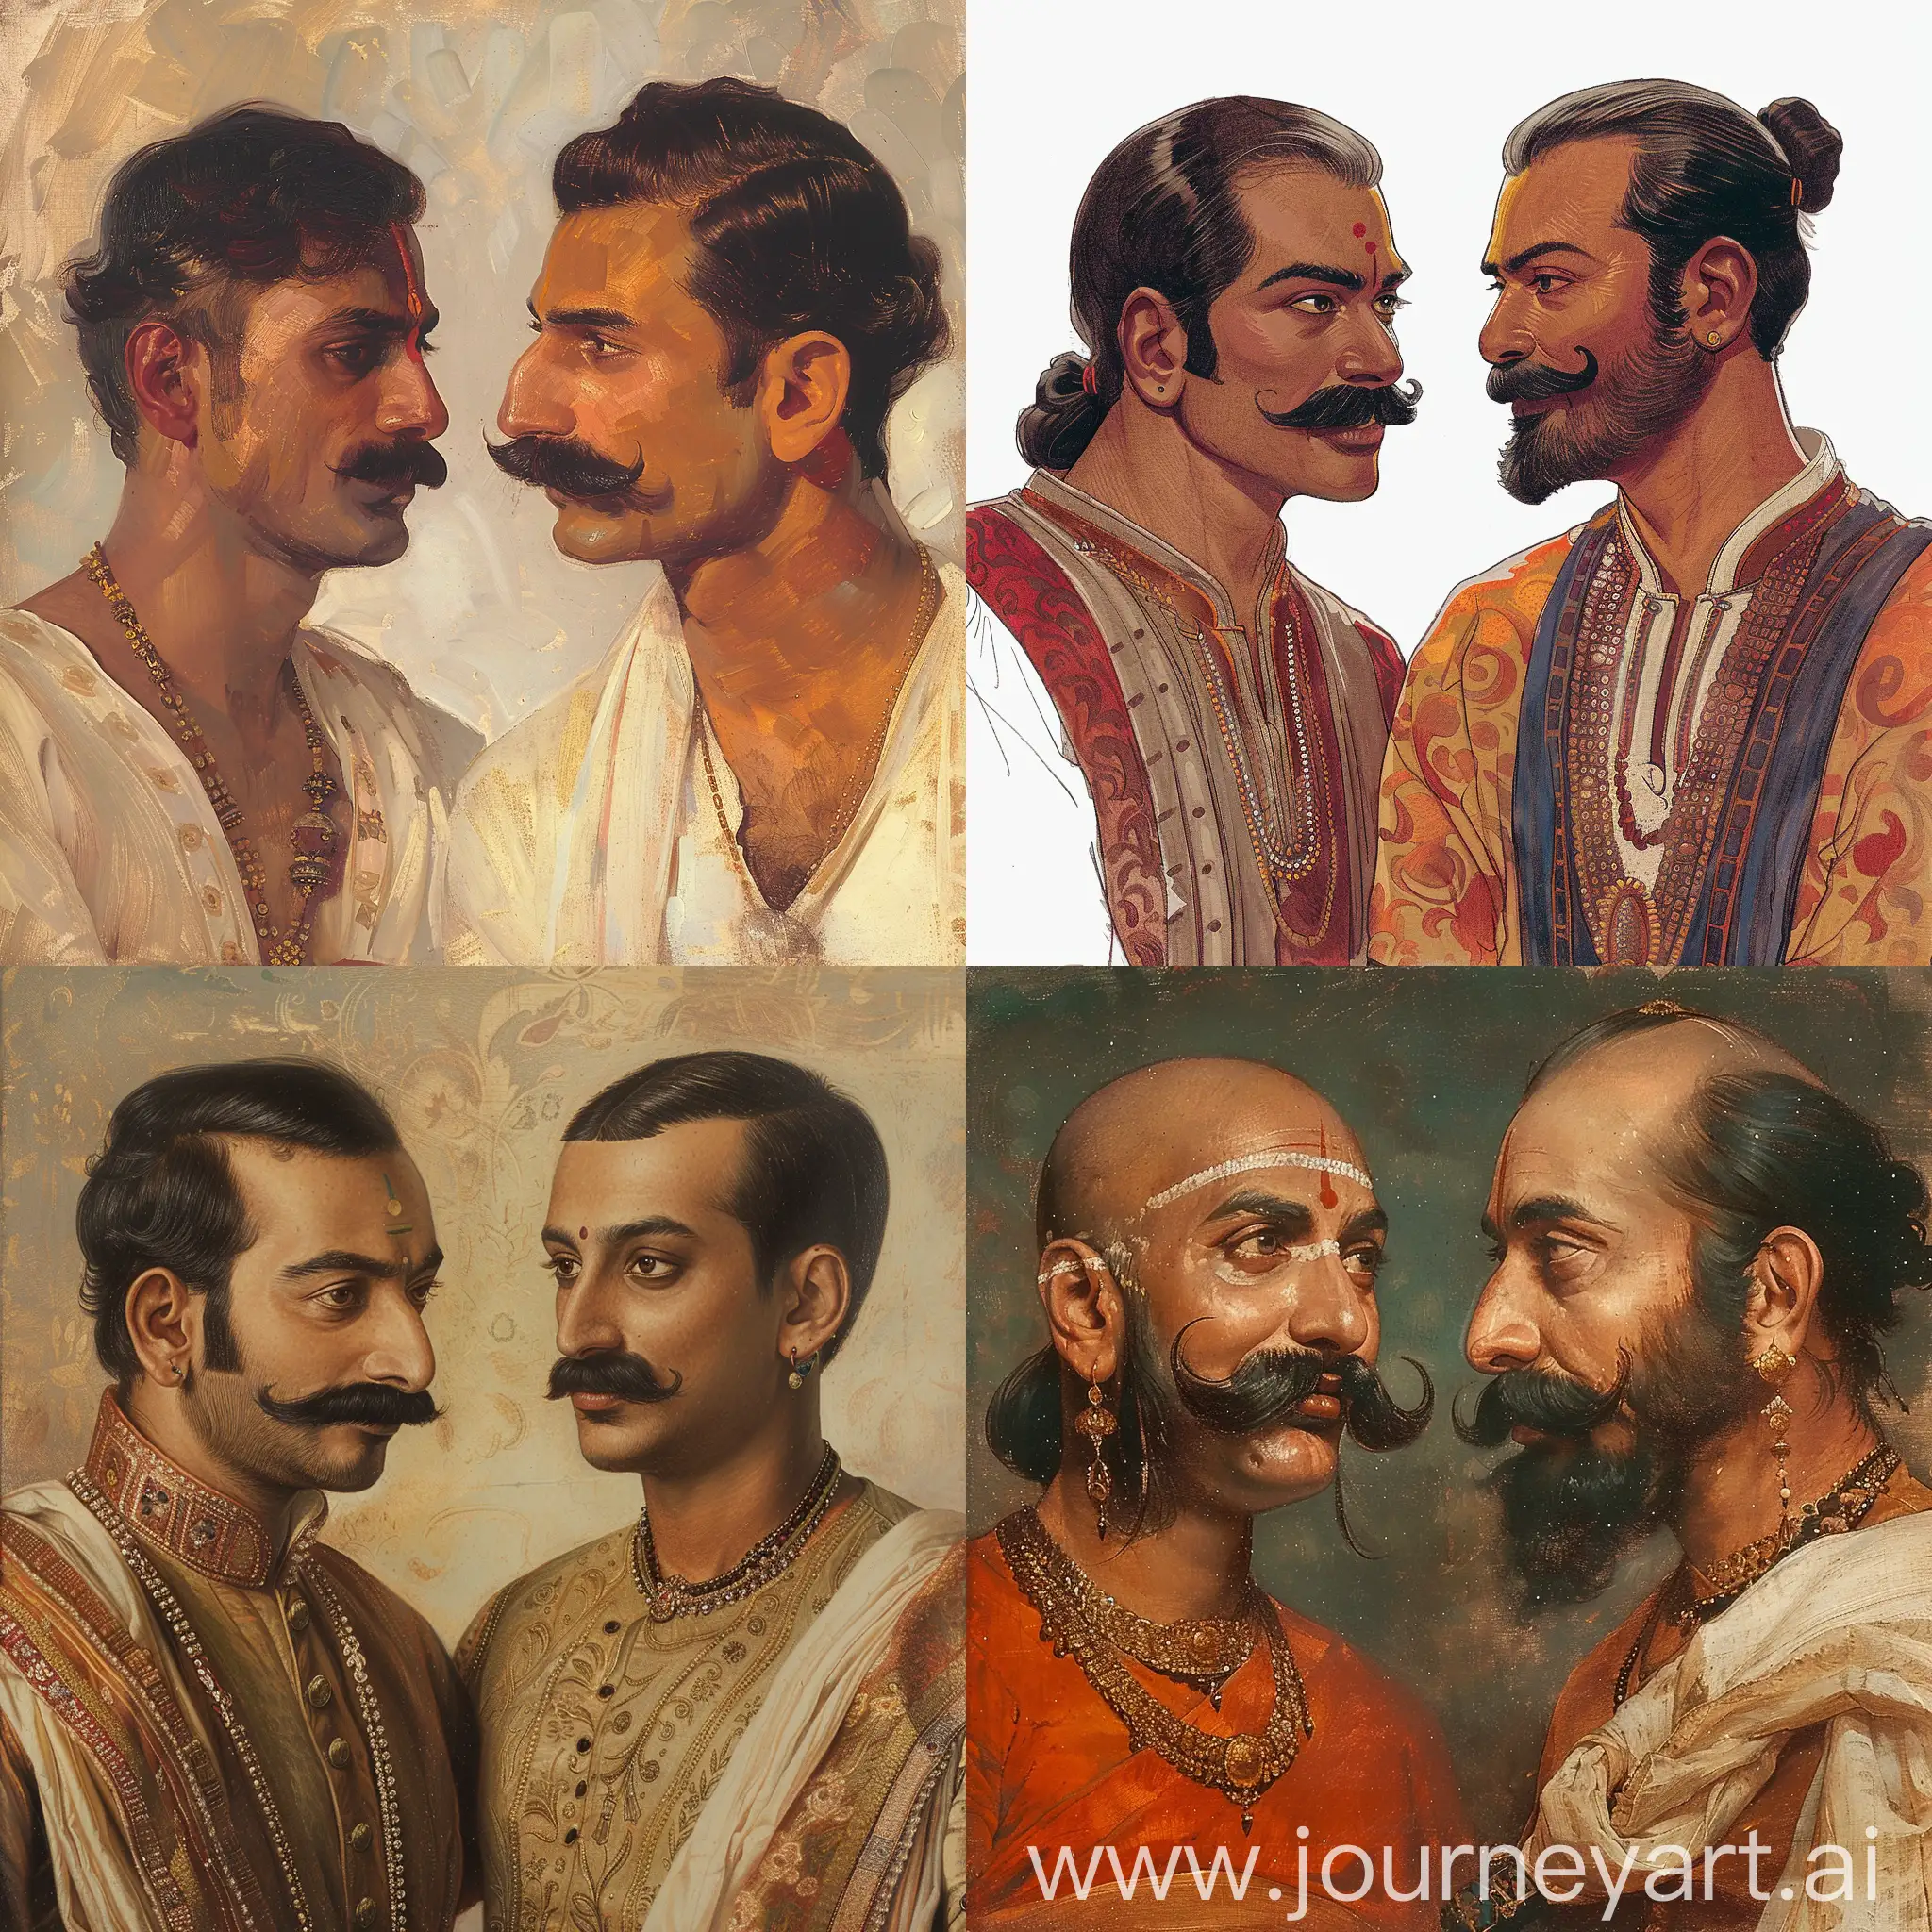 Rajput-Men-Conversing-in-1600-CE